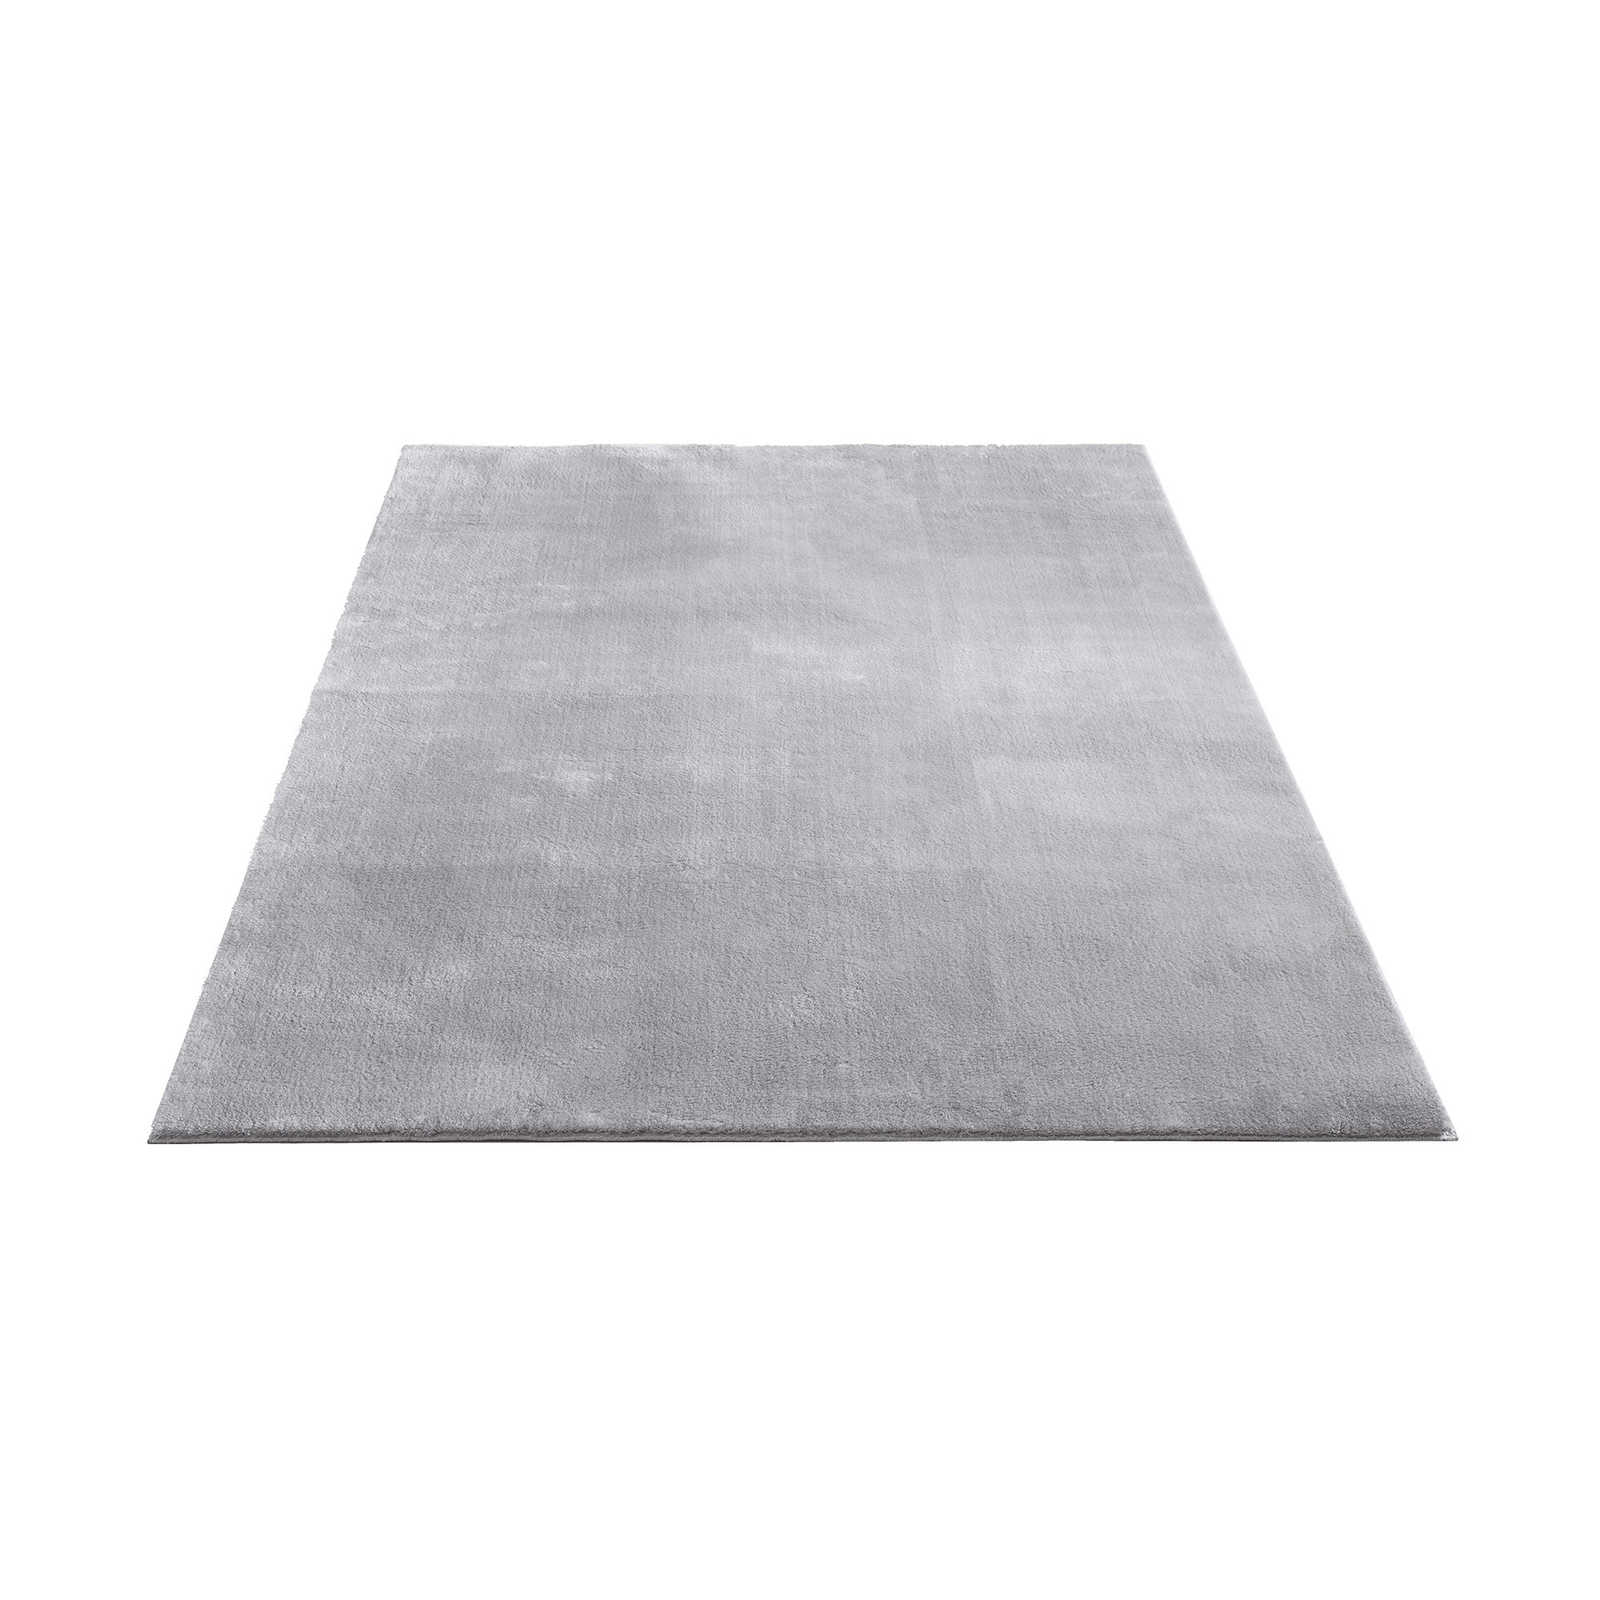 Feiner Hochflor Teppich in Grau – 290 x 200 cm
